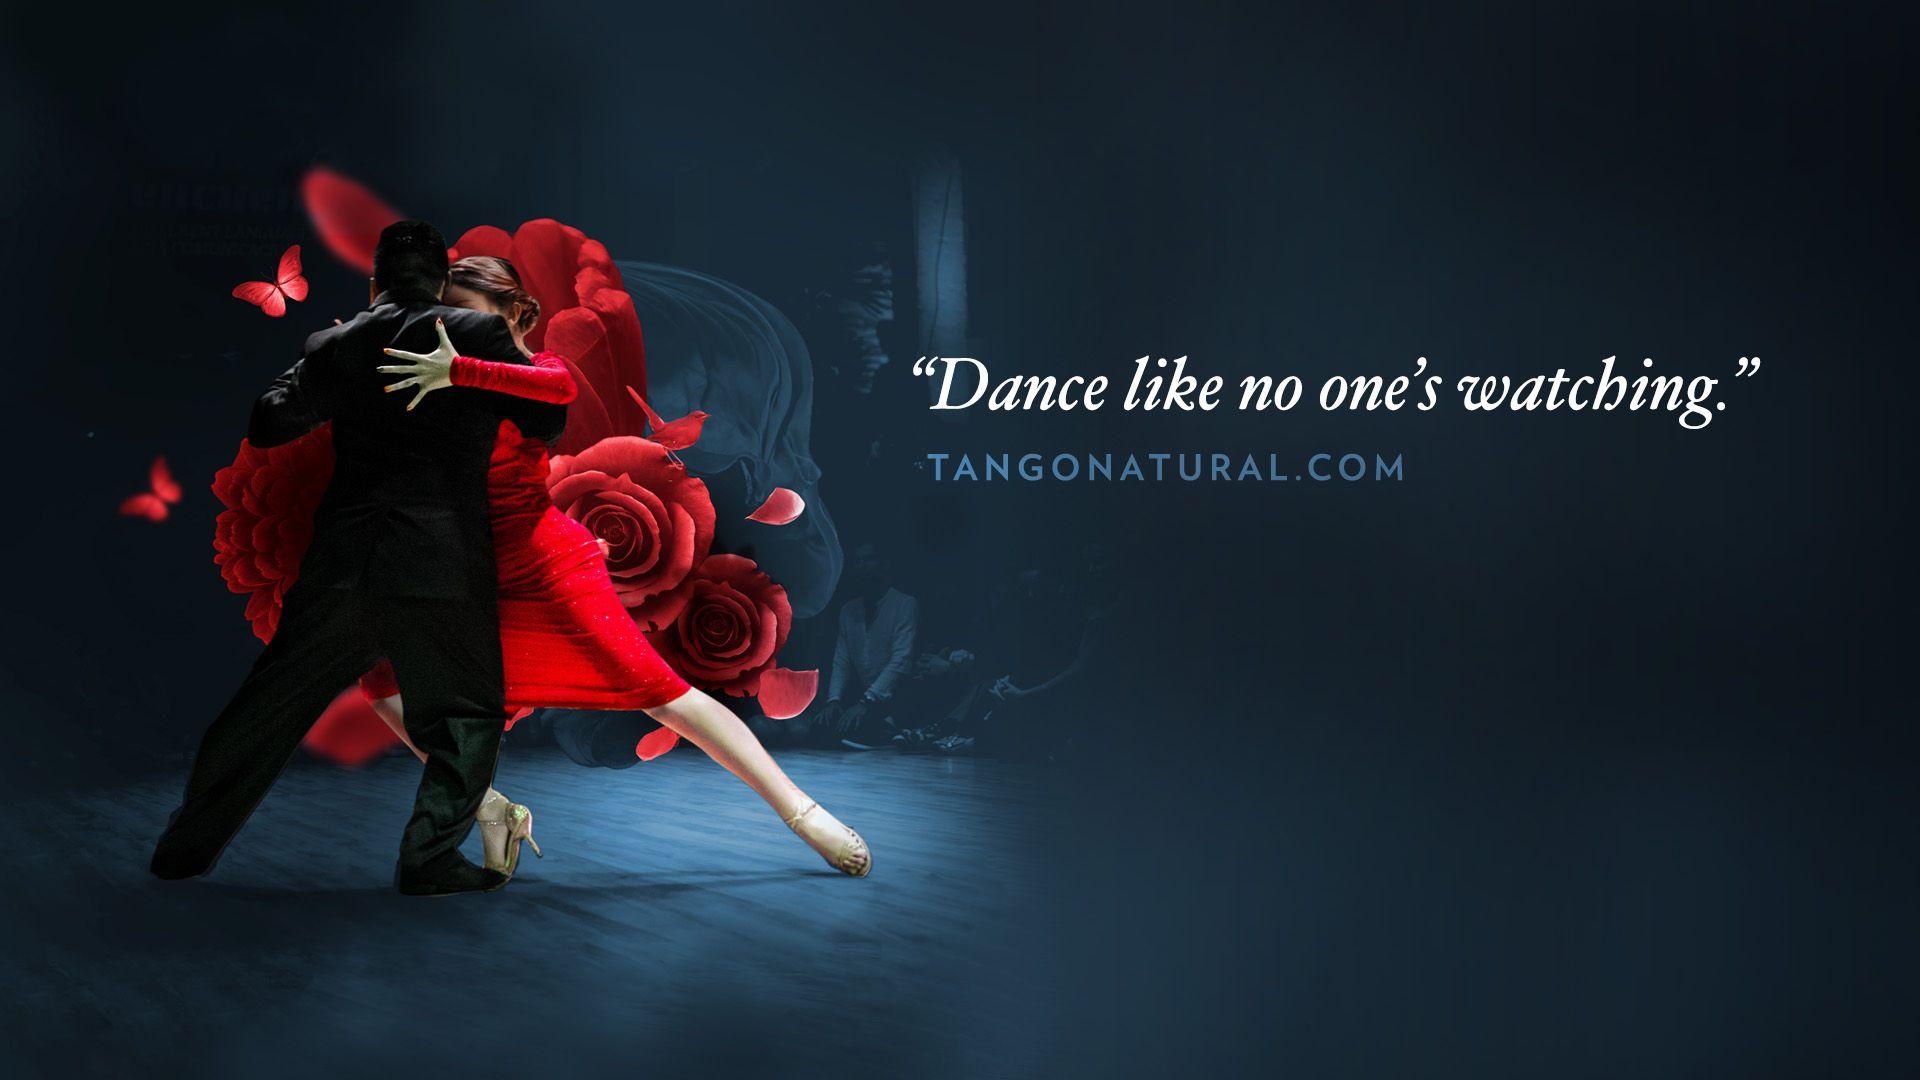 Tango Natural like no one's watching